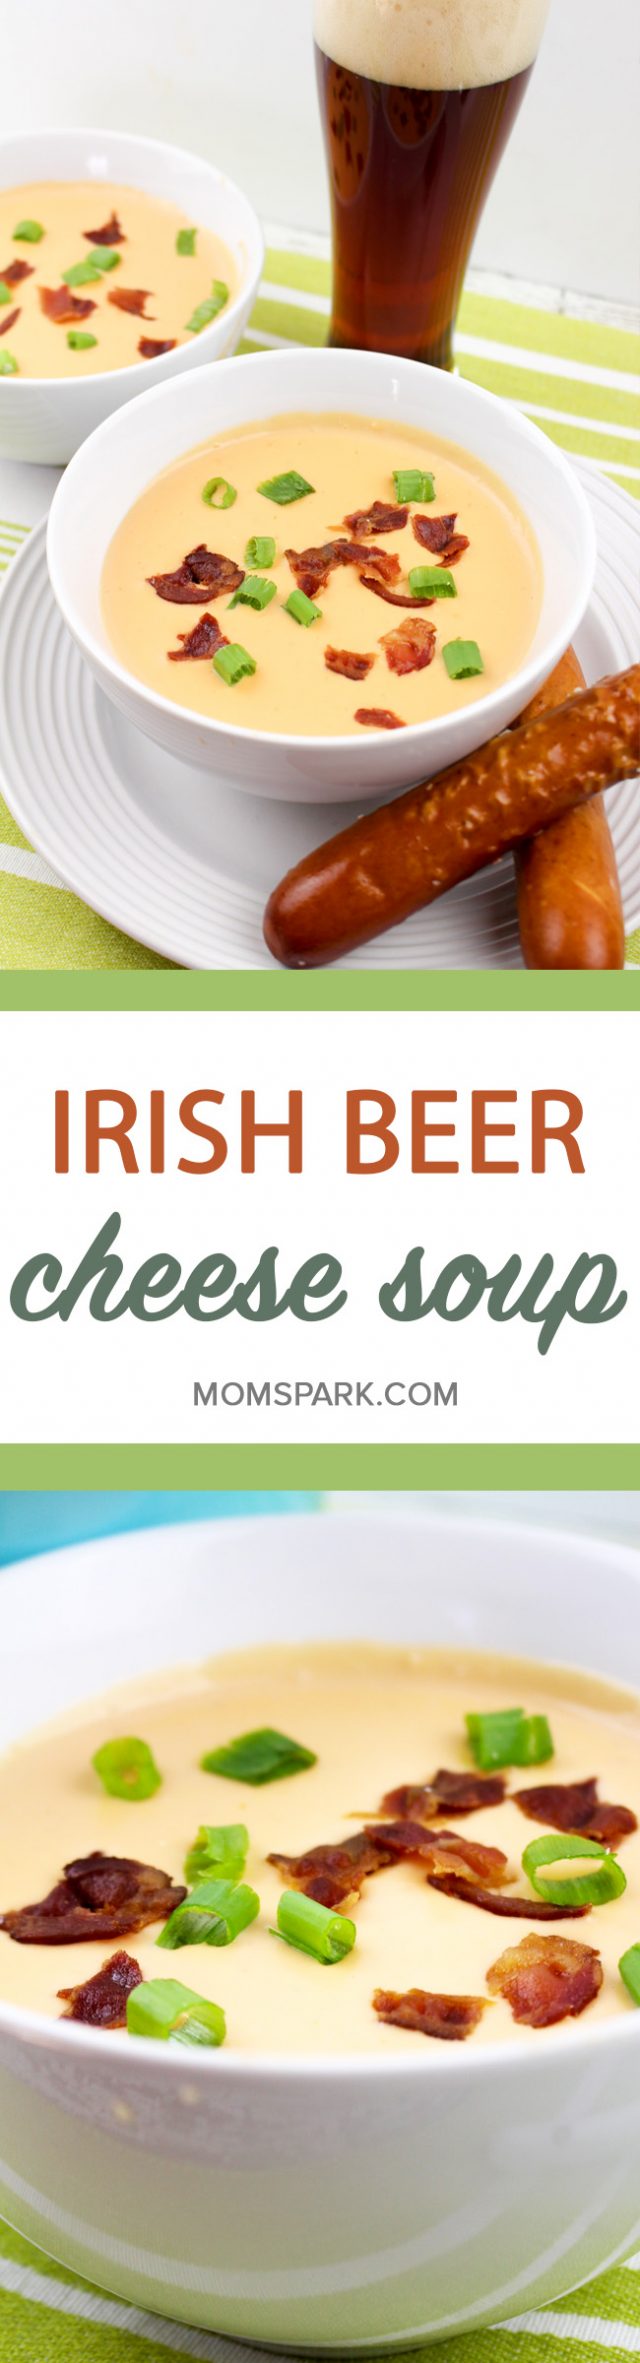 St. Patrick's Day Irish Beer Cheese Soup Recipe